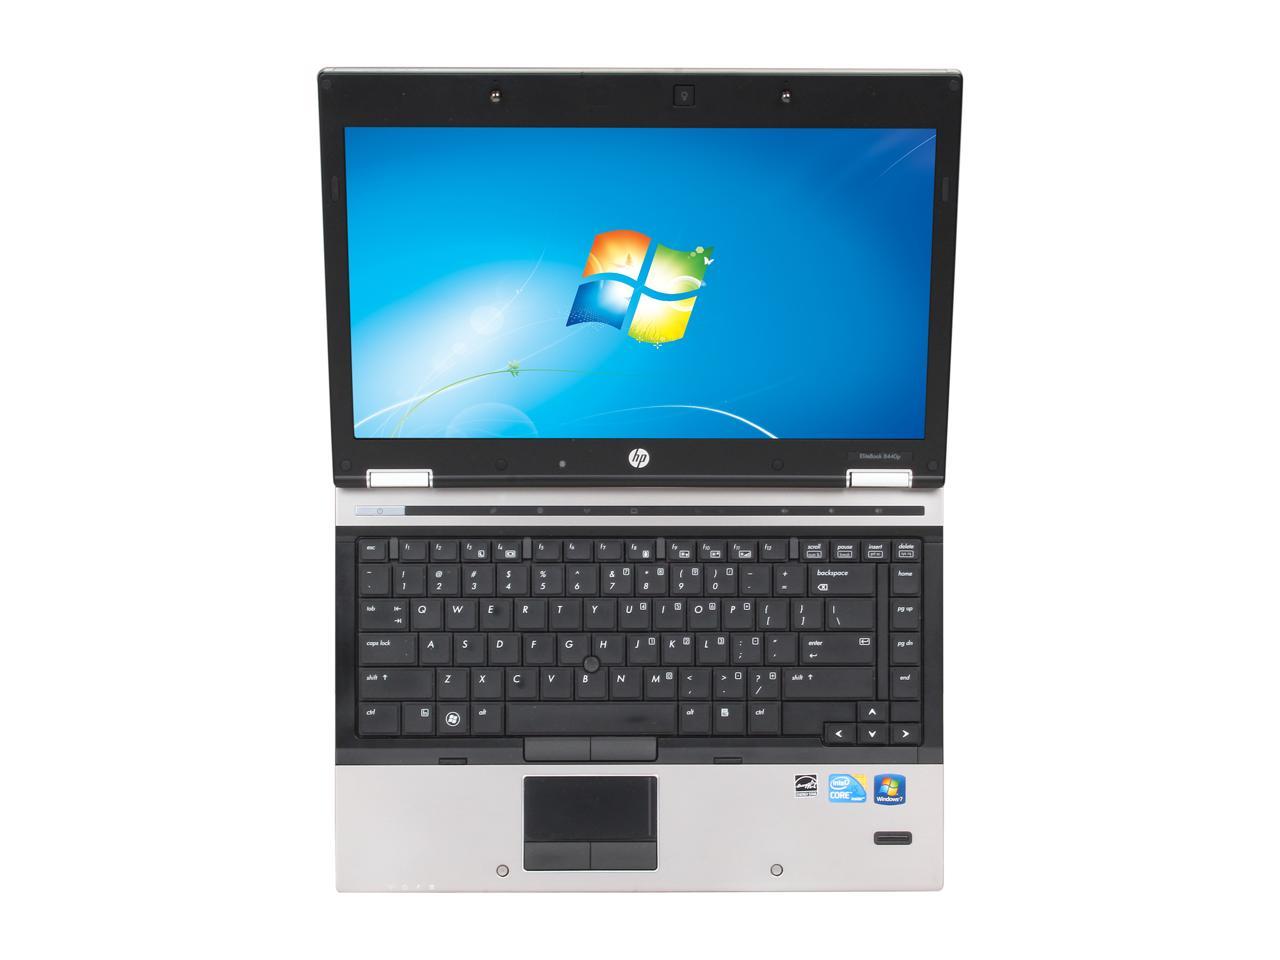 Refurbished Hp Laptop Elitebook 8440p Intel Core I5 1st Gen 540m 253 Ghz 4 Gb Memory 160 Gb 6487